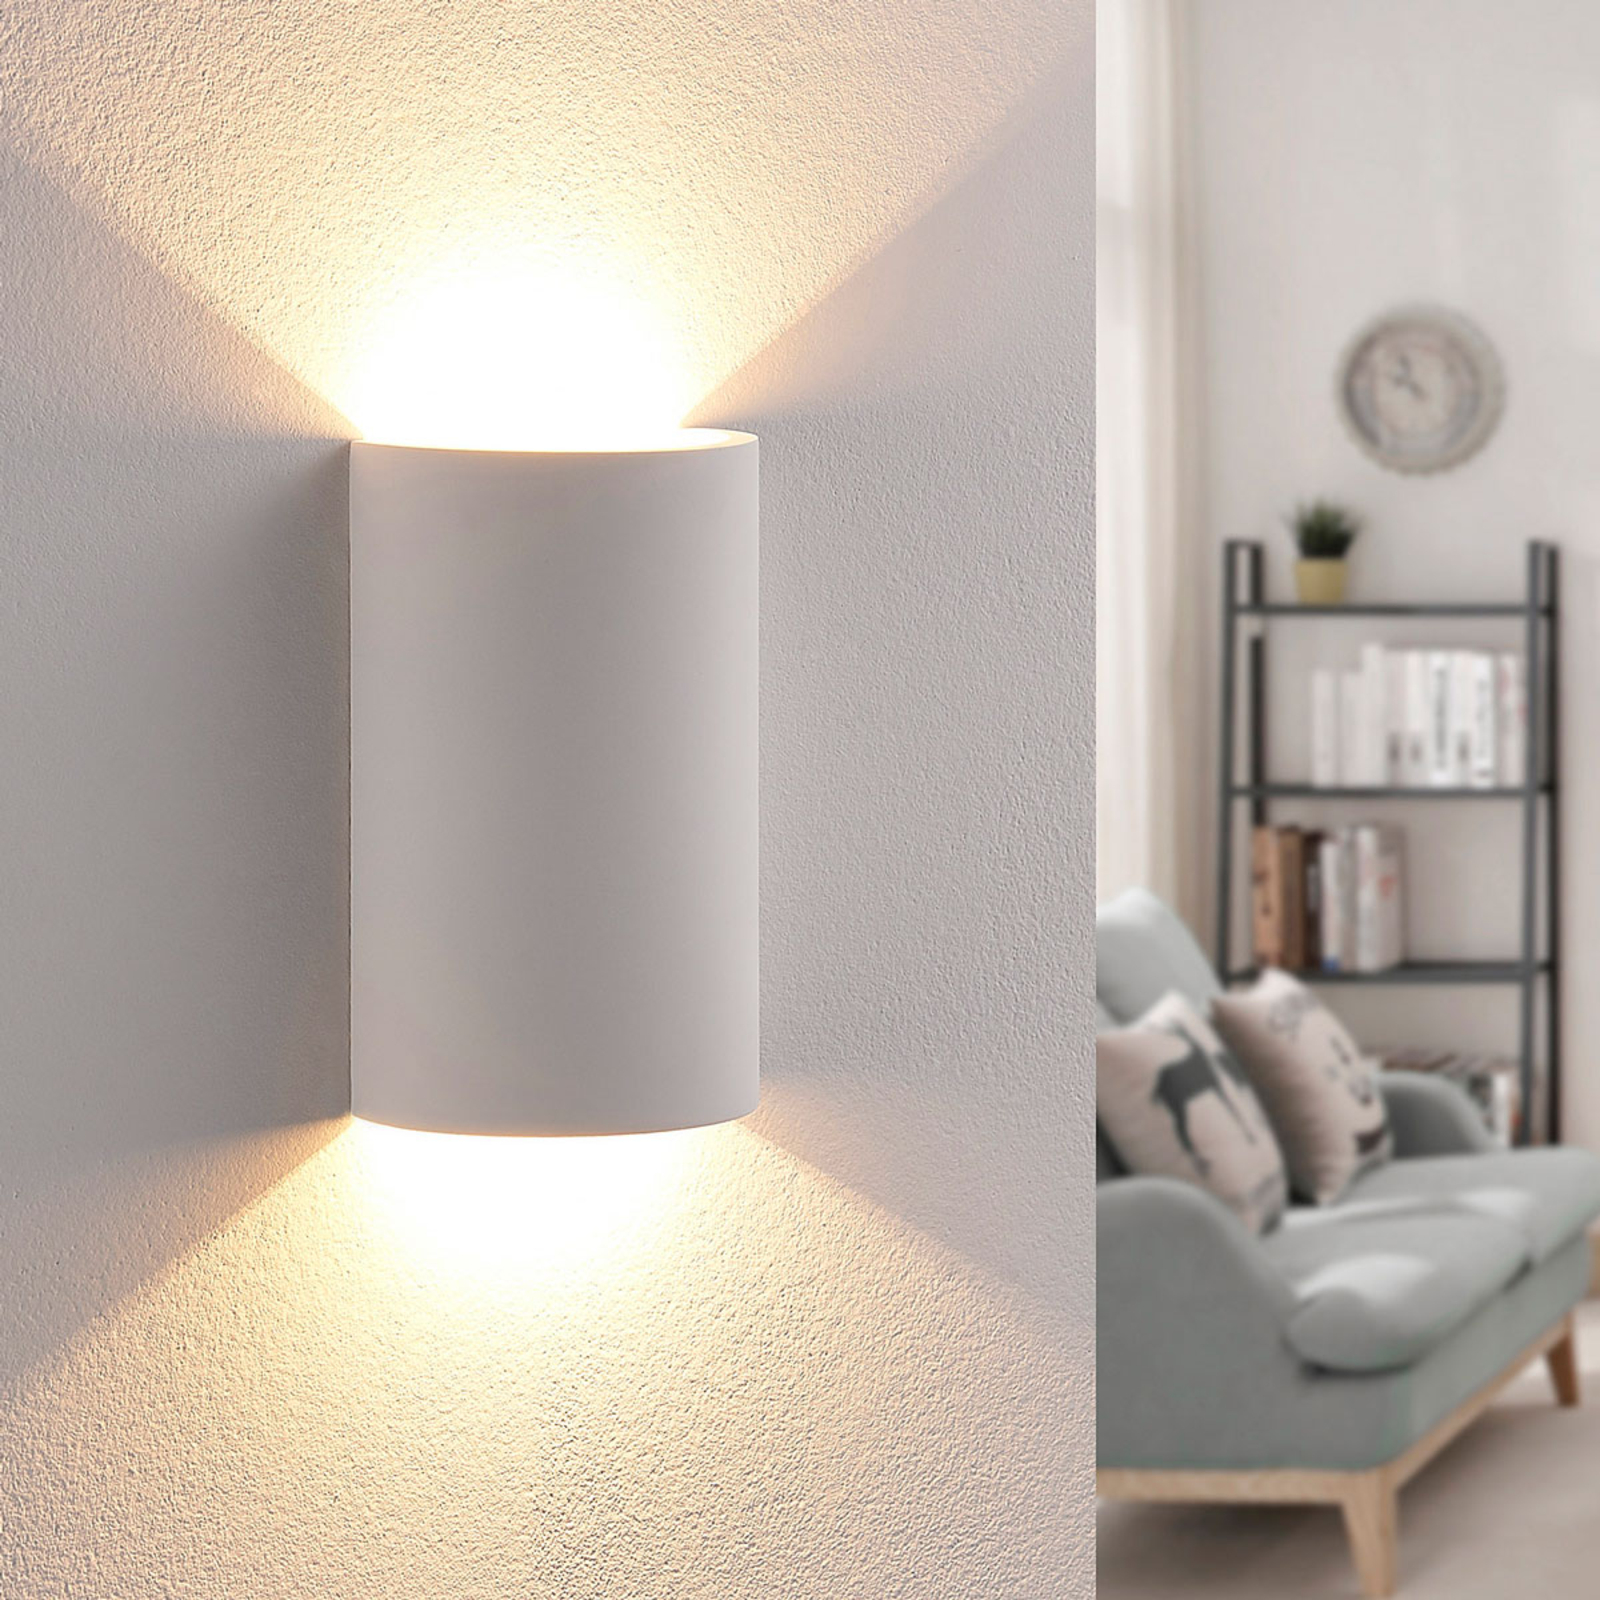 LED wall light Jenke, plaster, semi-circular